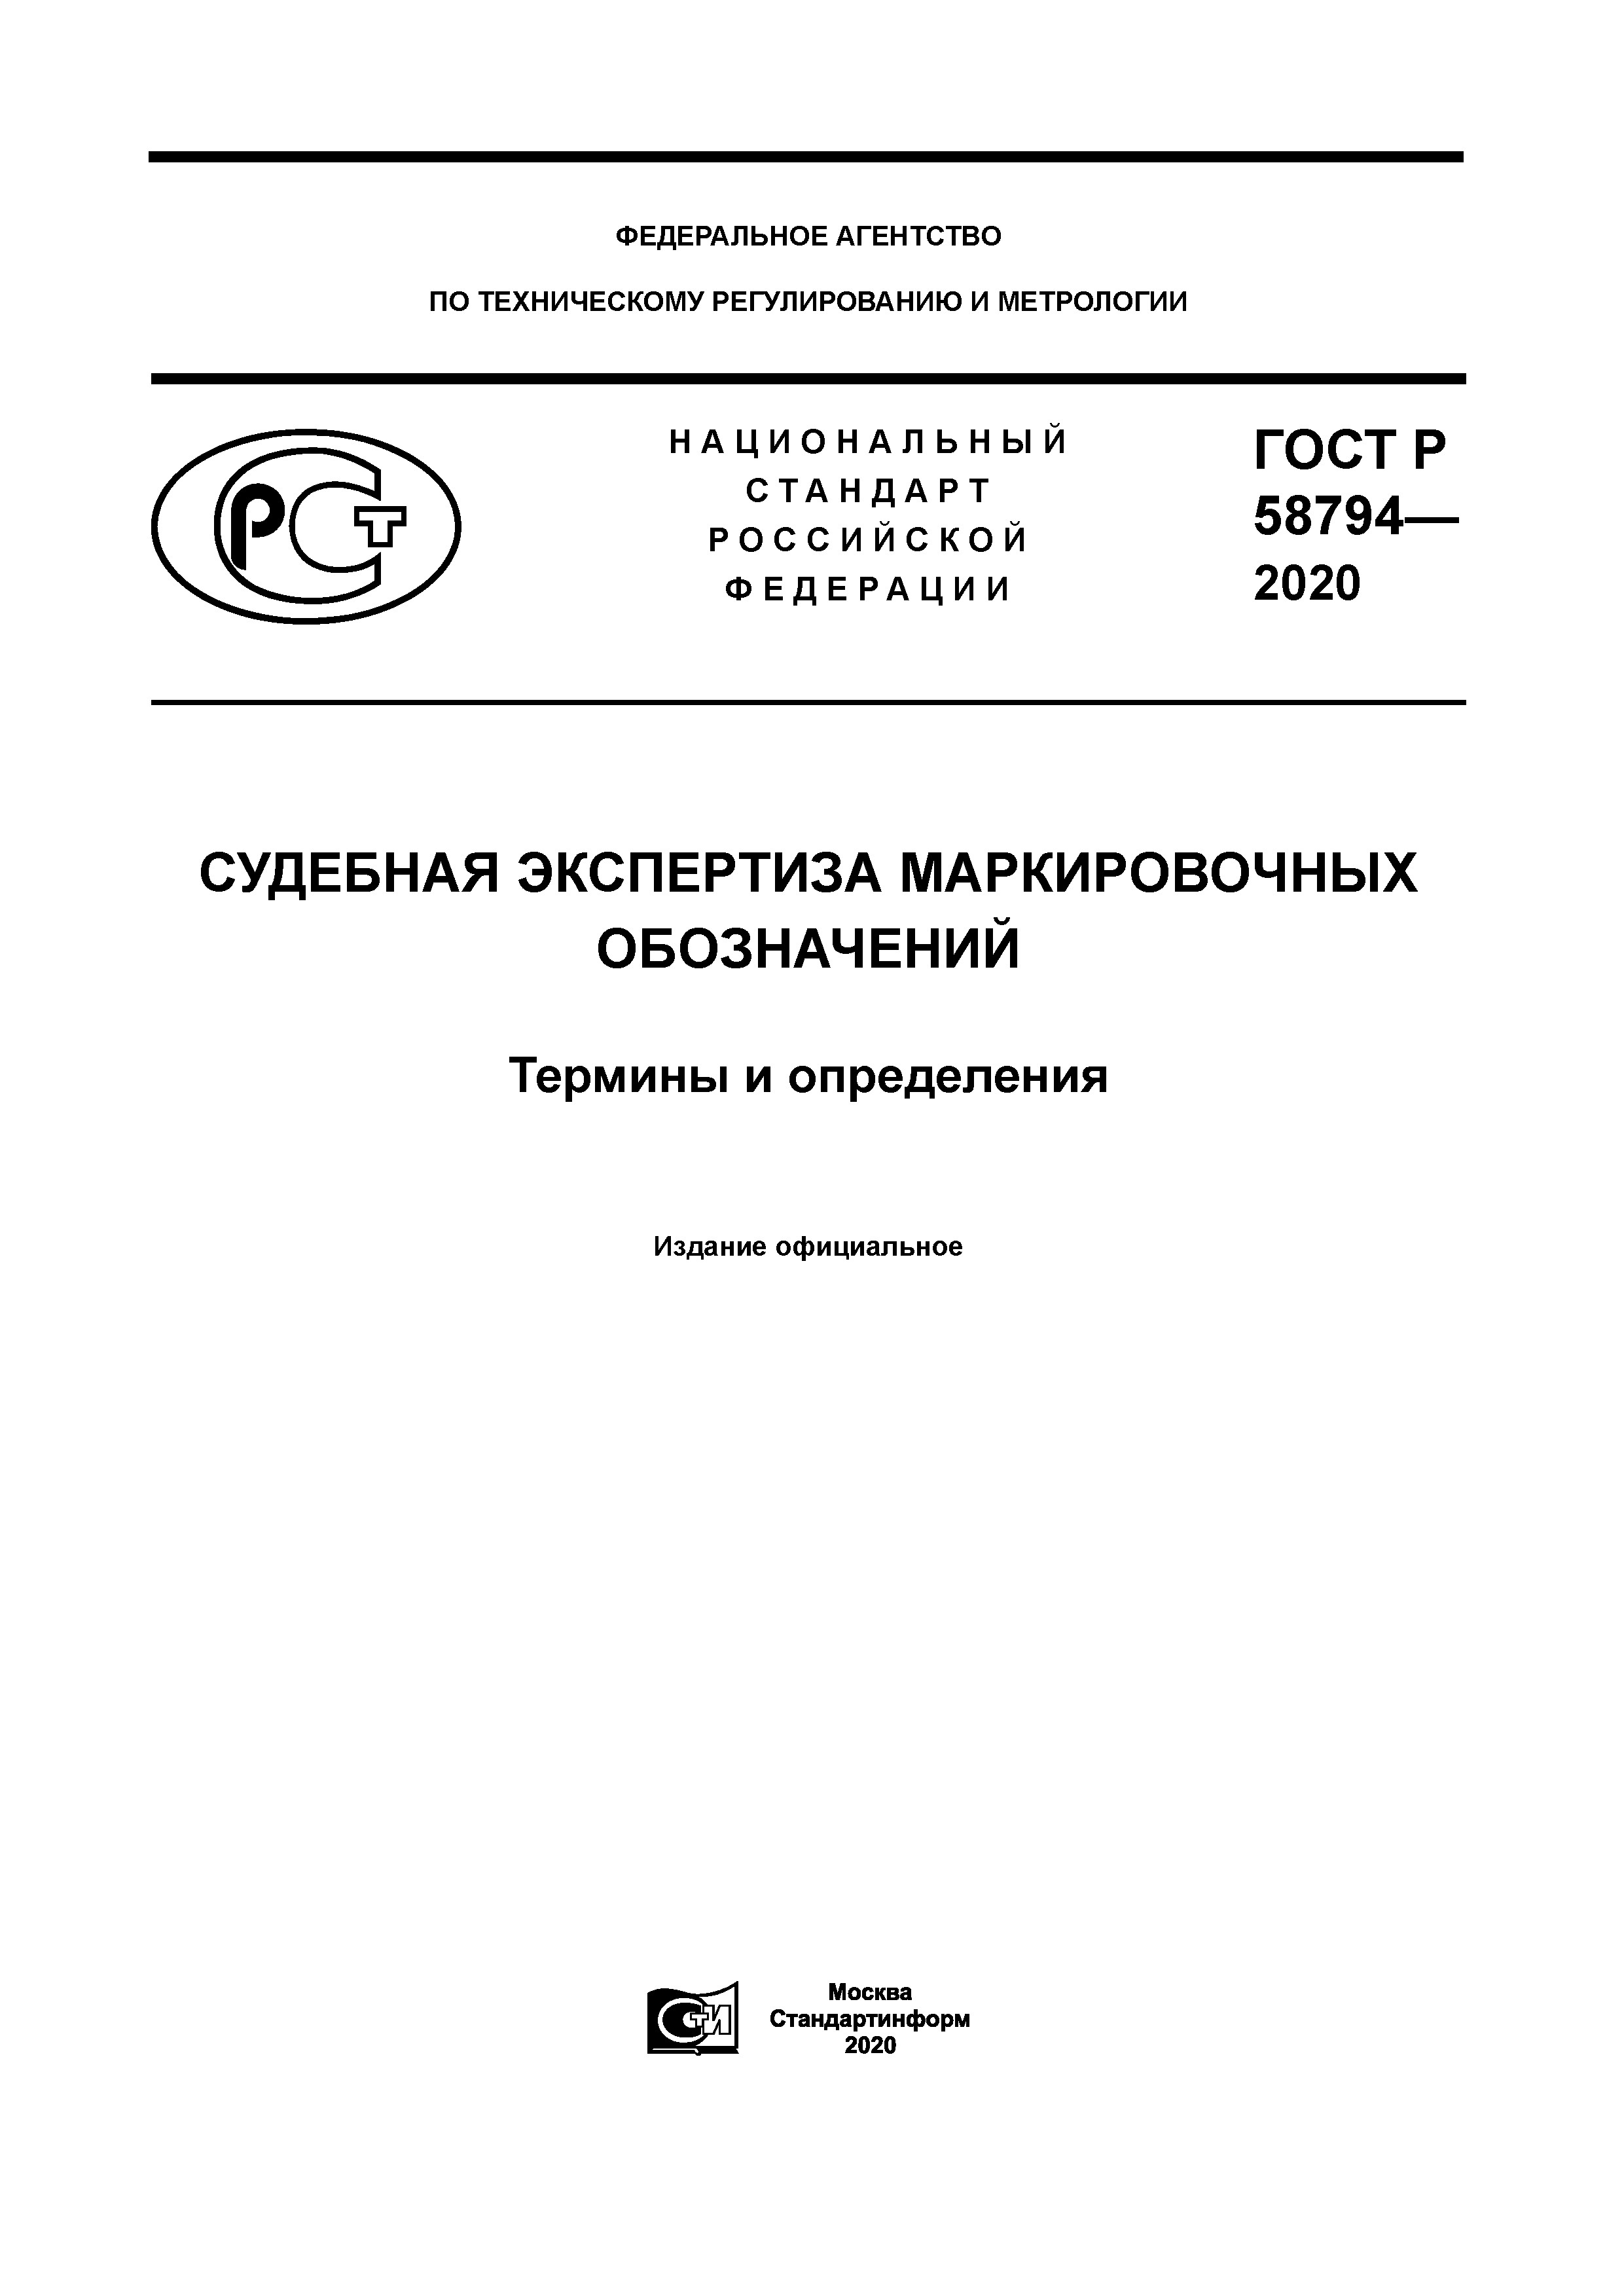 ГОСТ Р 58794-2020